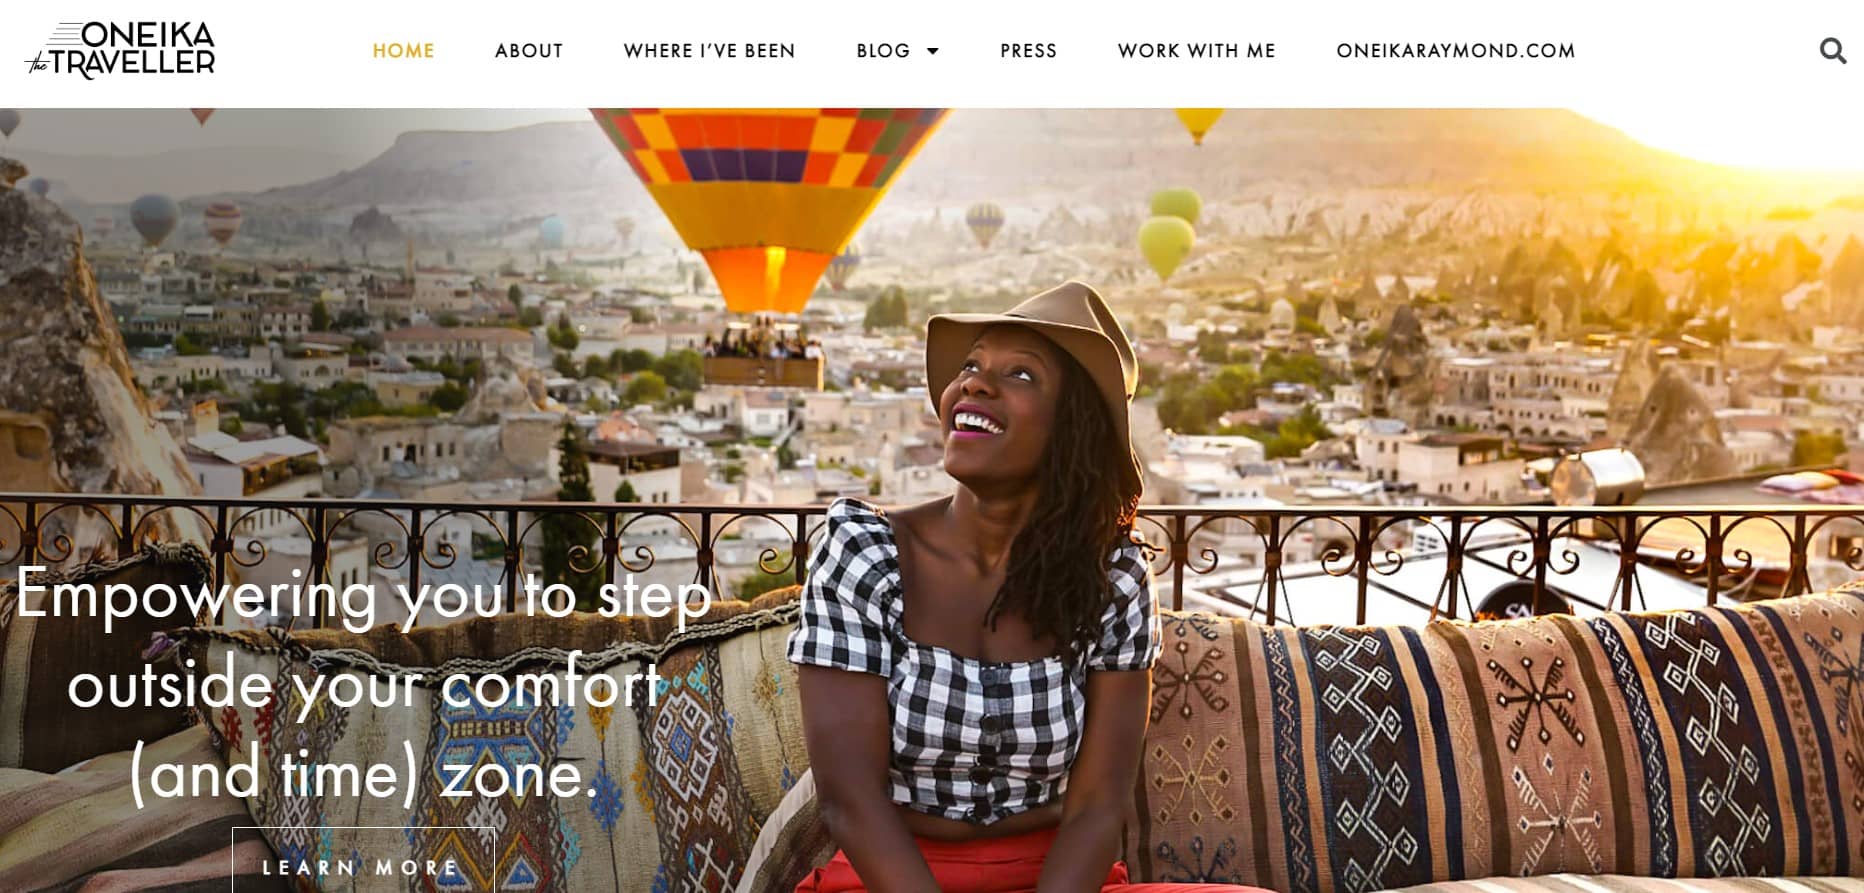 Travel Blog Name Ideas, Oneika The Traveller Homepage